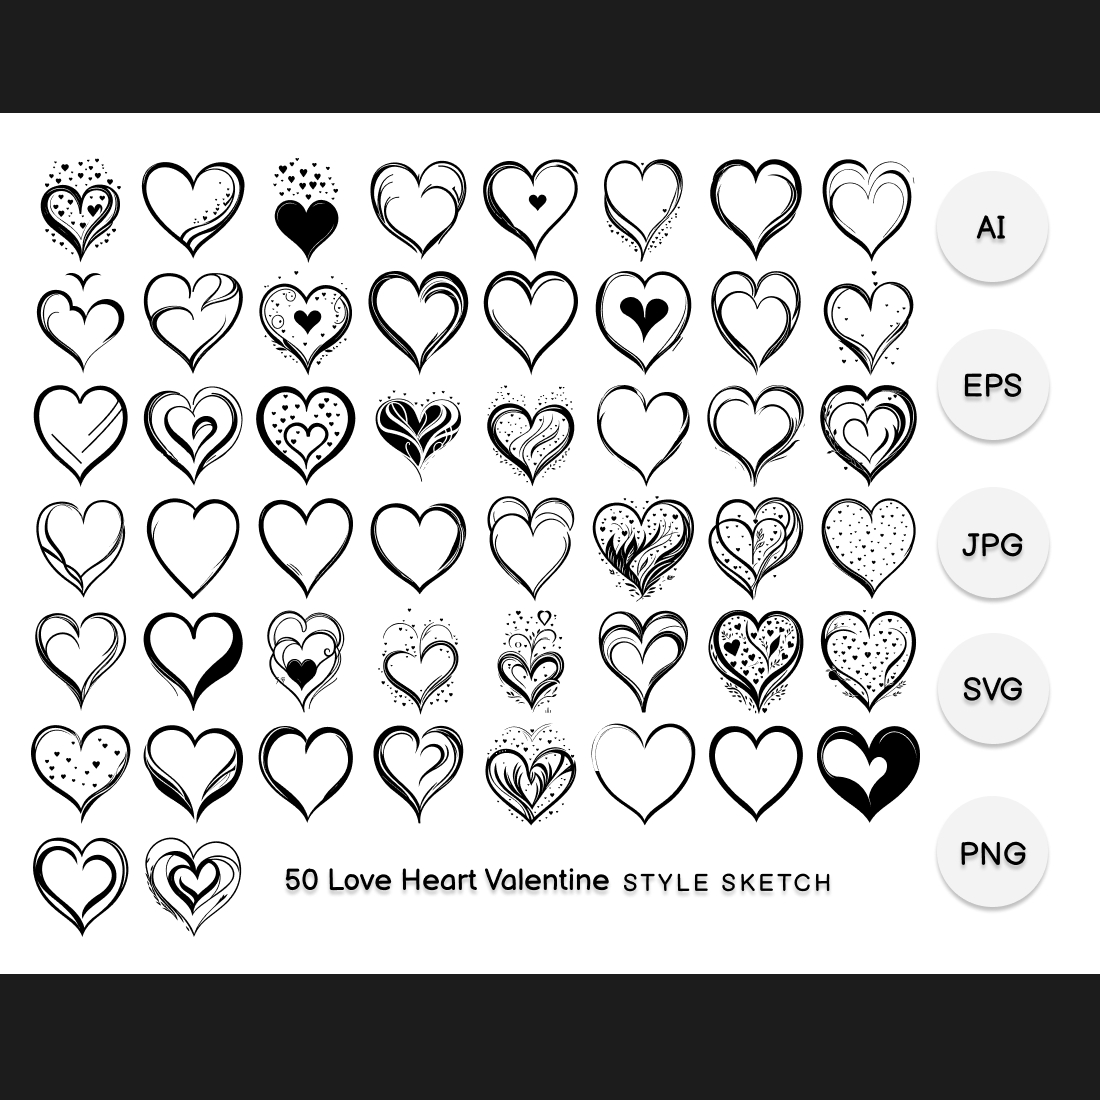 Love Heart Valentine Element Draw Black cover image.